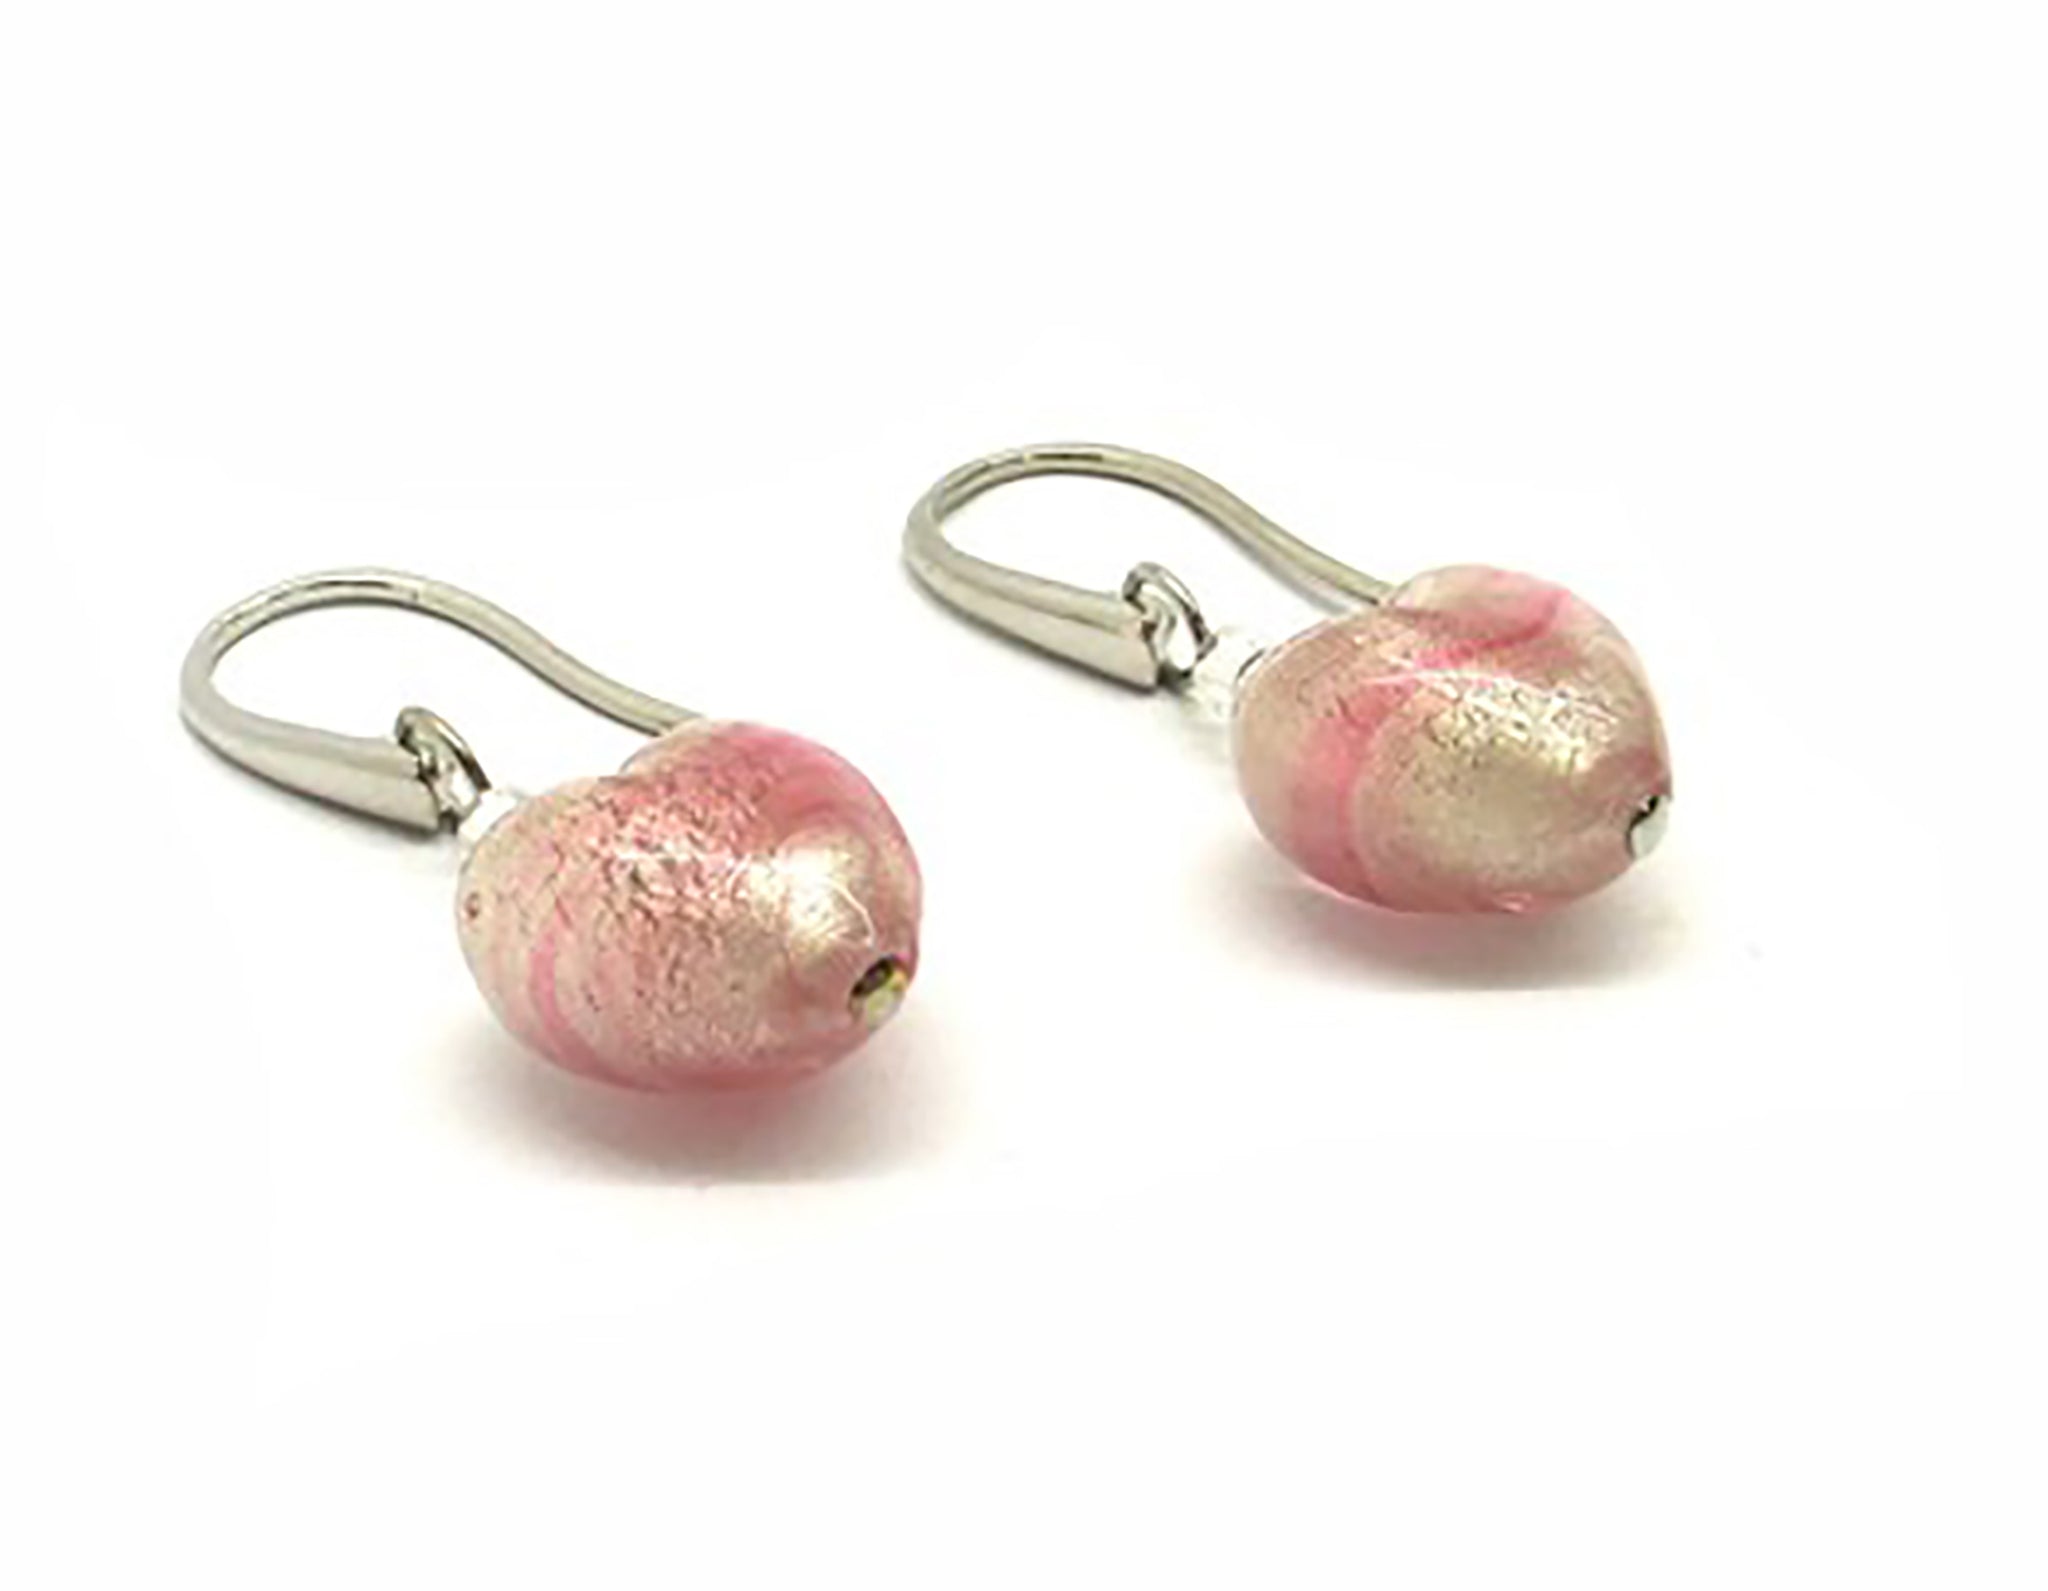 Murano Glass Earrings - Heart Shaped - Mod. Giulia, 12 mm - Pink - Sterling Silver